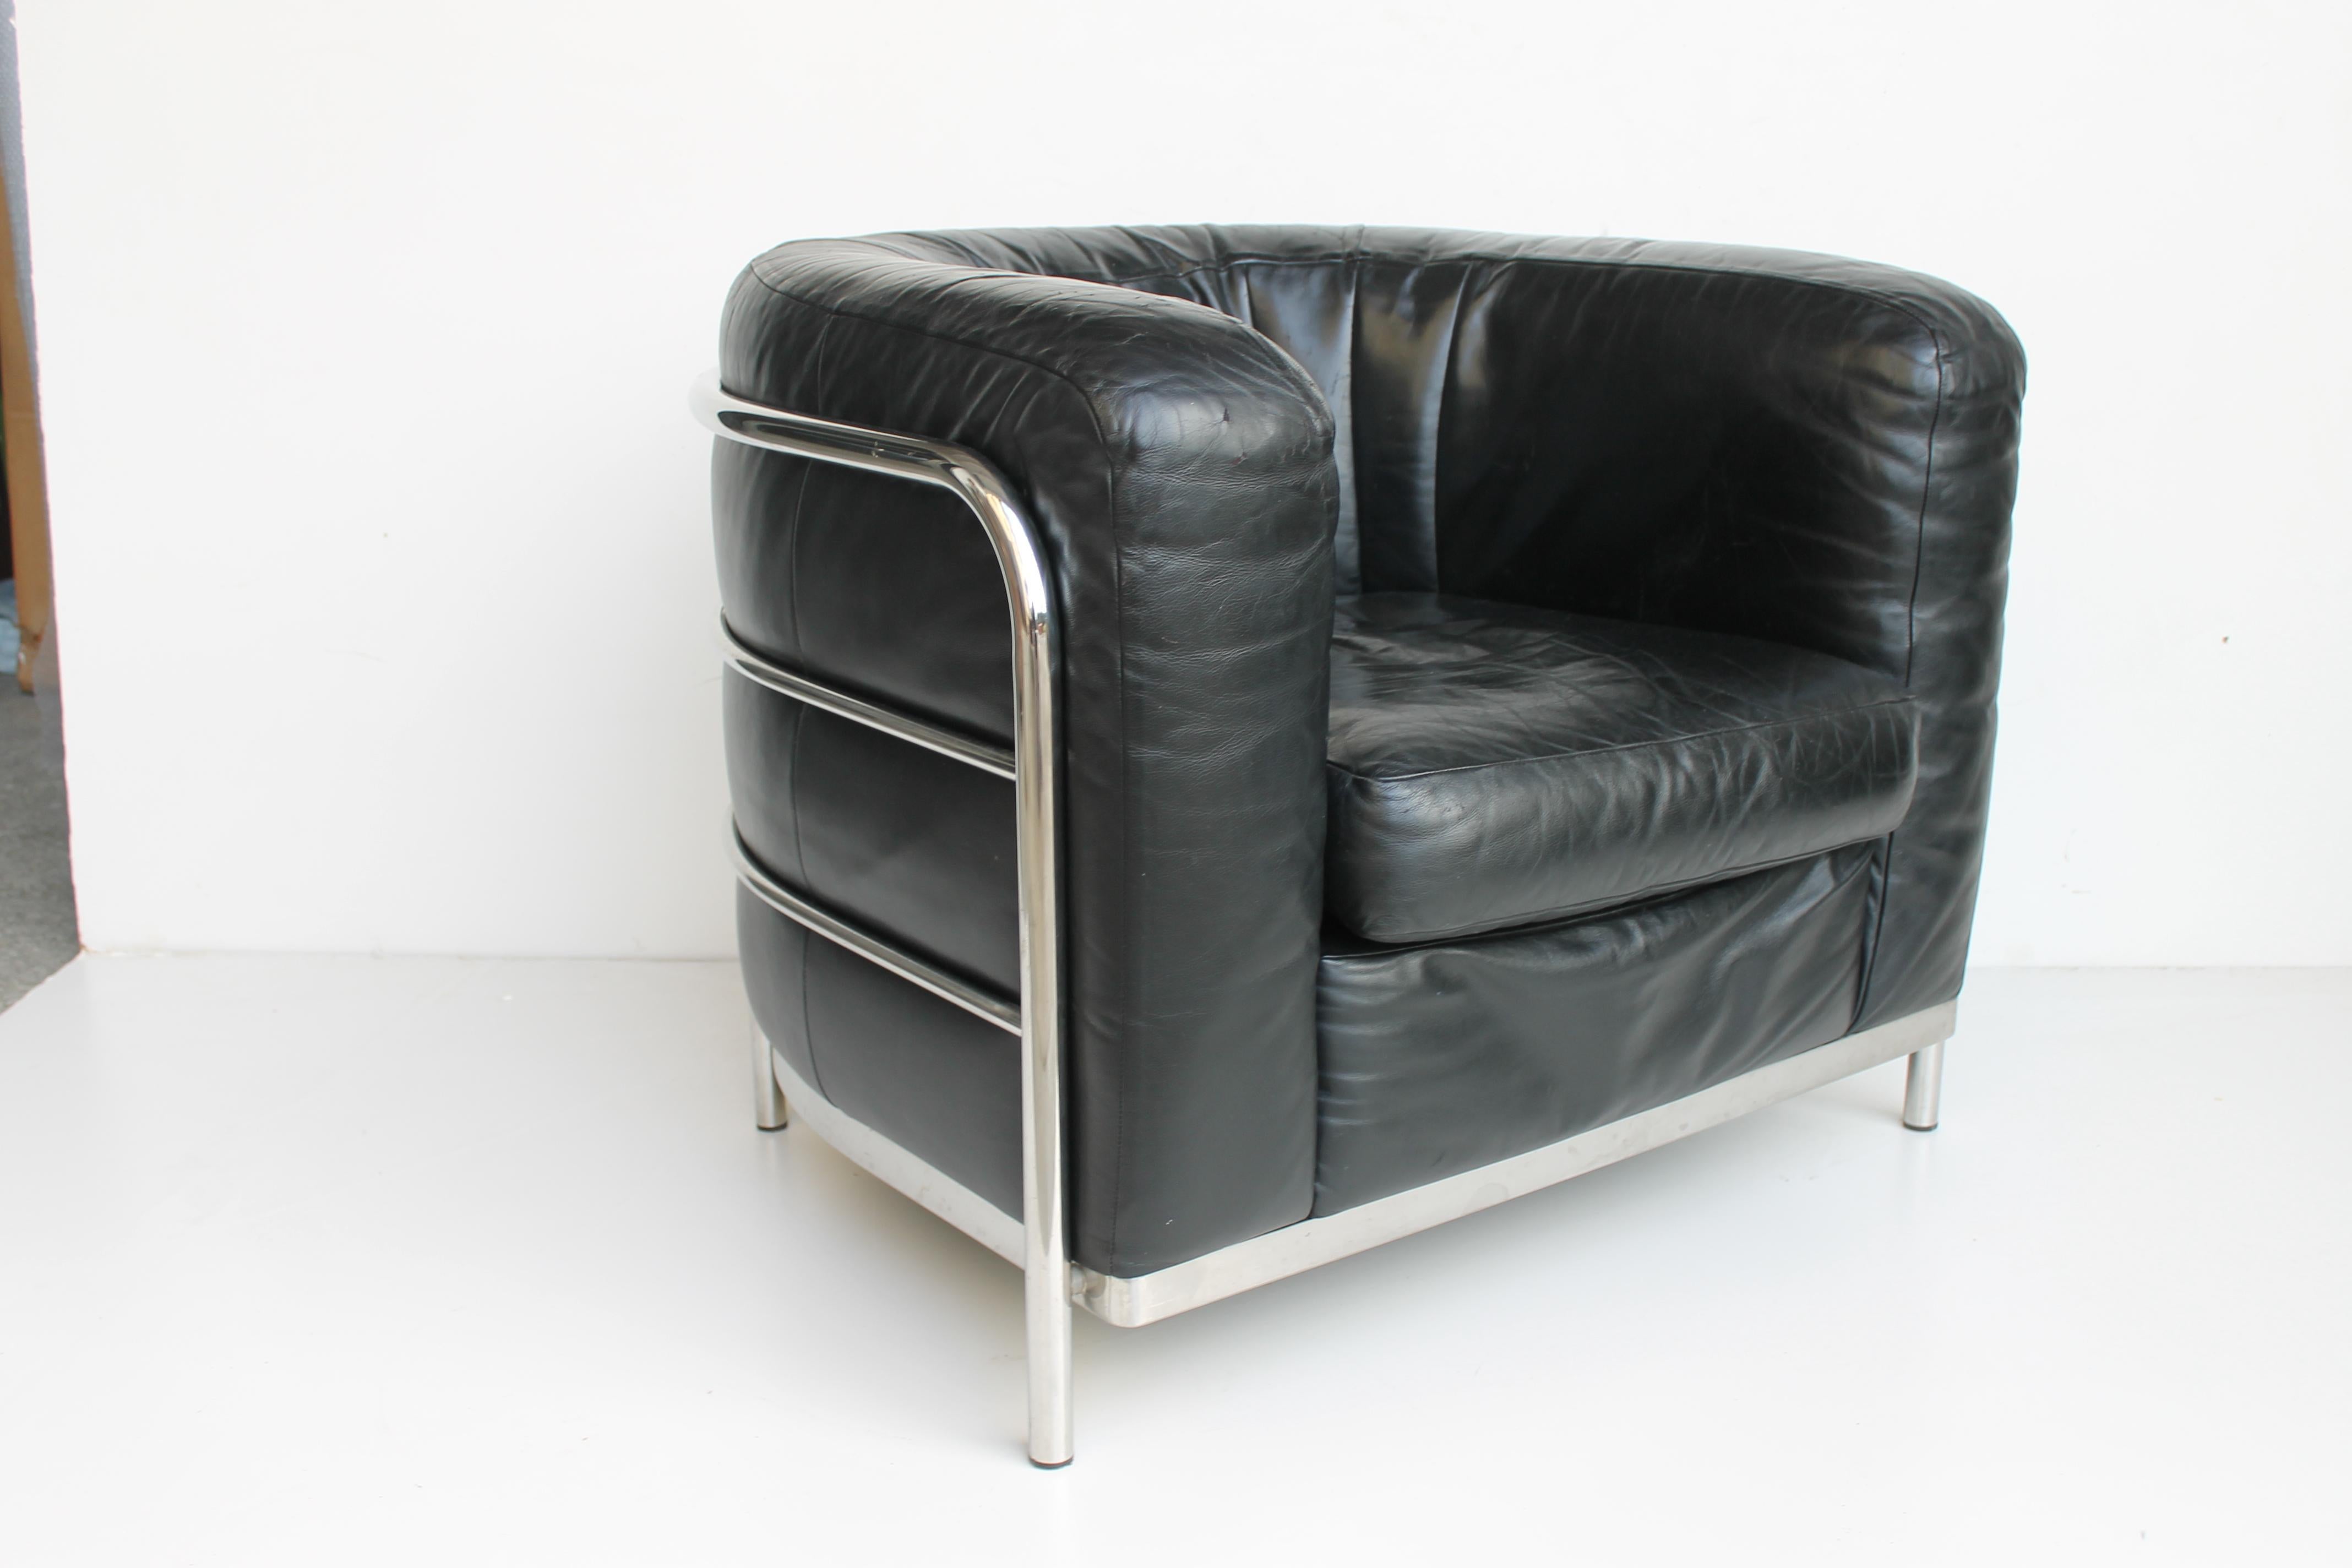 Italian Onda armchair in black leather designed by Jonathan de Pas, Donato D’Urbino and Paolo Lomazzi in 1985 for Zanotta. Stel metal structure and feet. Labelled by Zanotta Italy.
   